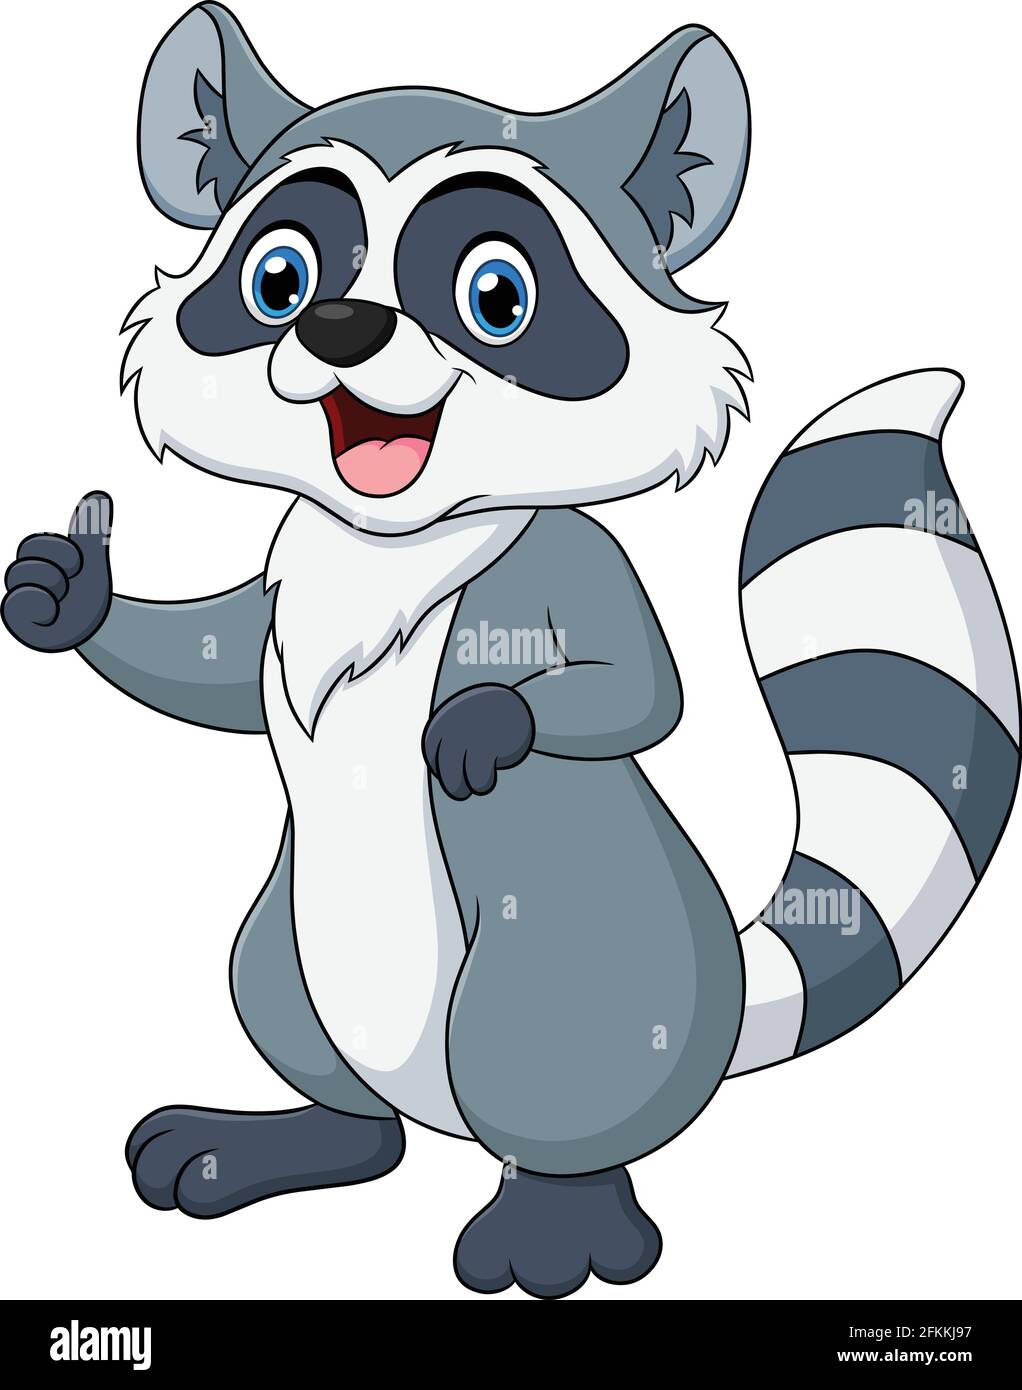 Simpatico Raccoon cartoon animale vettore illustrazione Illustrazione Vettoriale